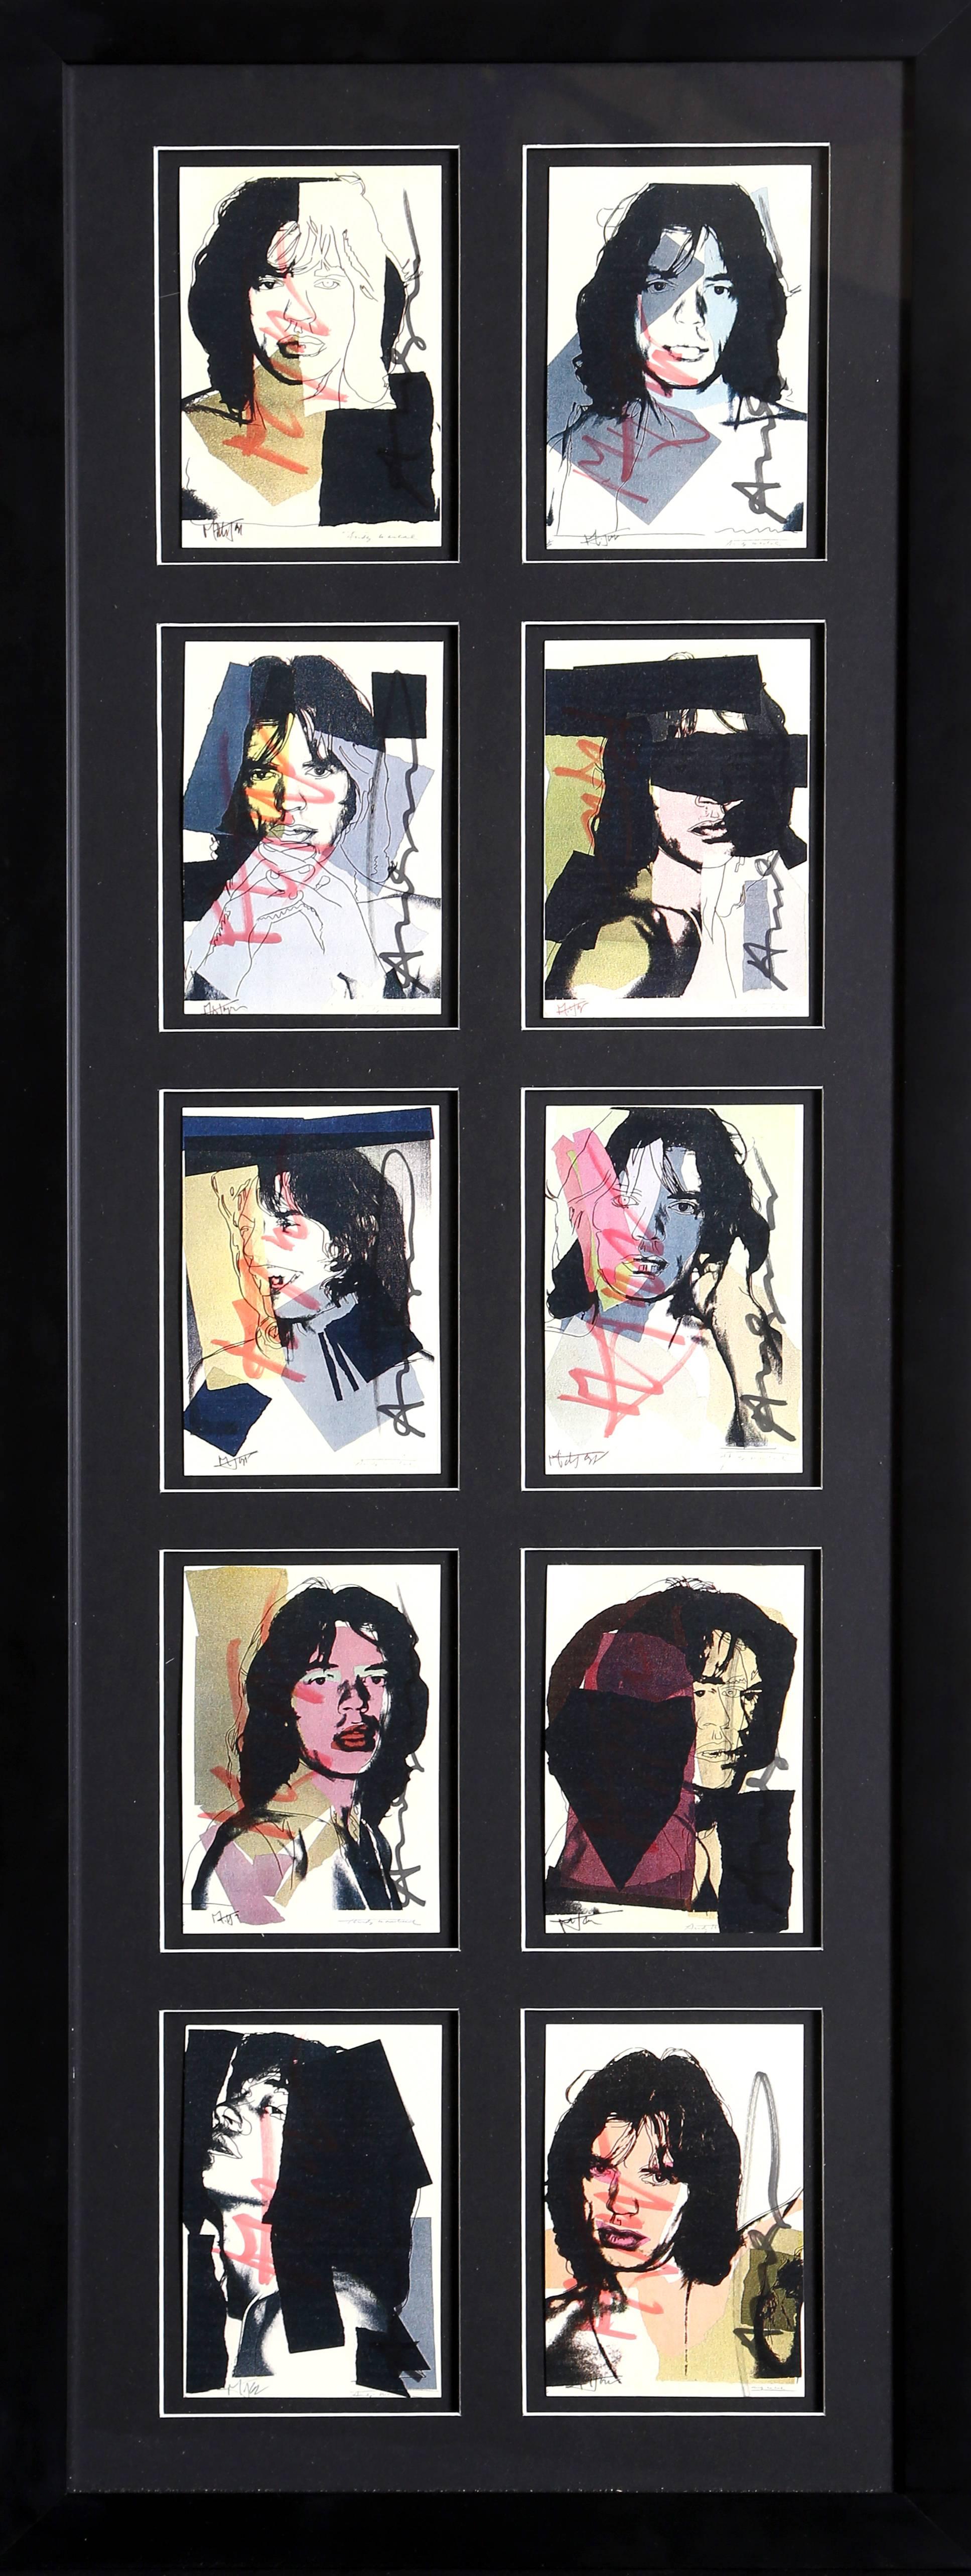 (after) Andy Warhol Portrait Print - Mick Jagger Announcement Card Portfolio